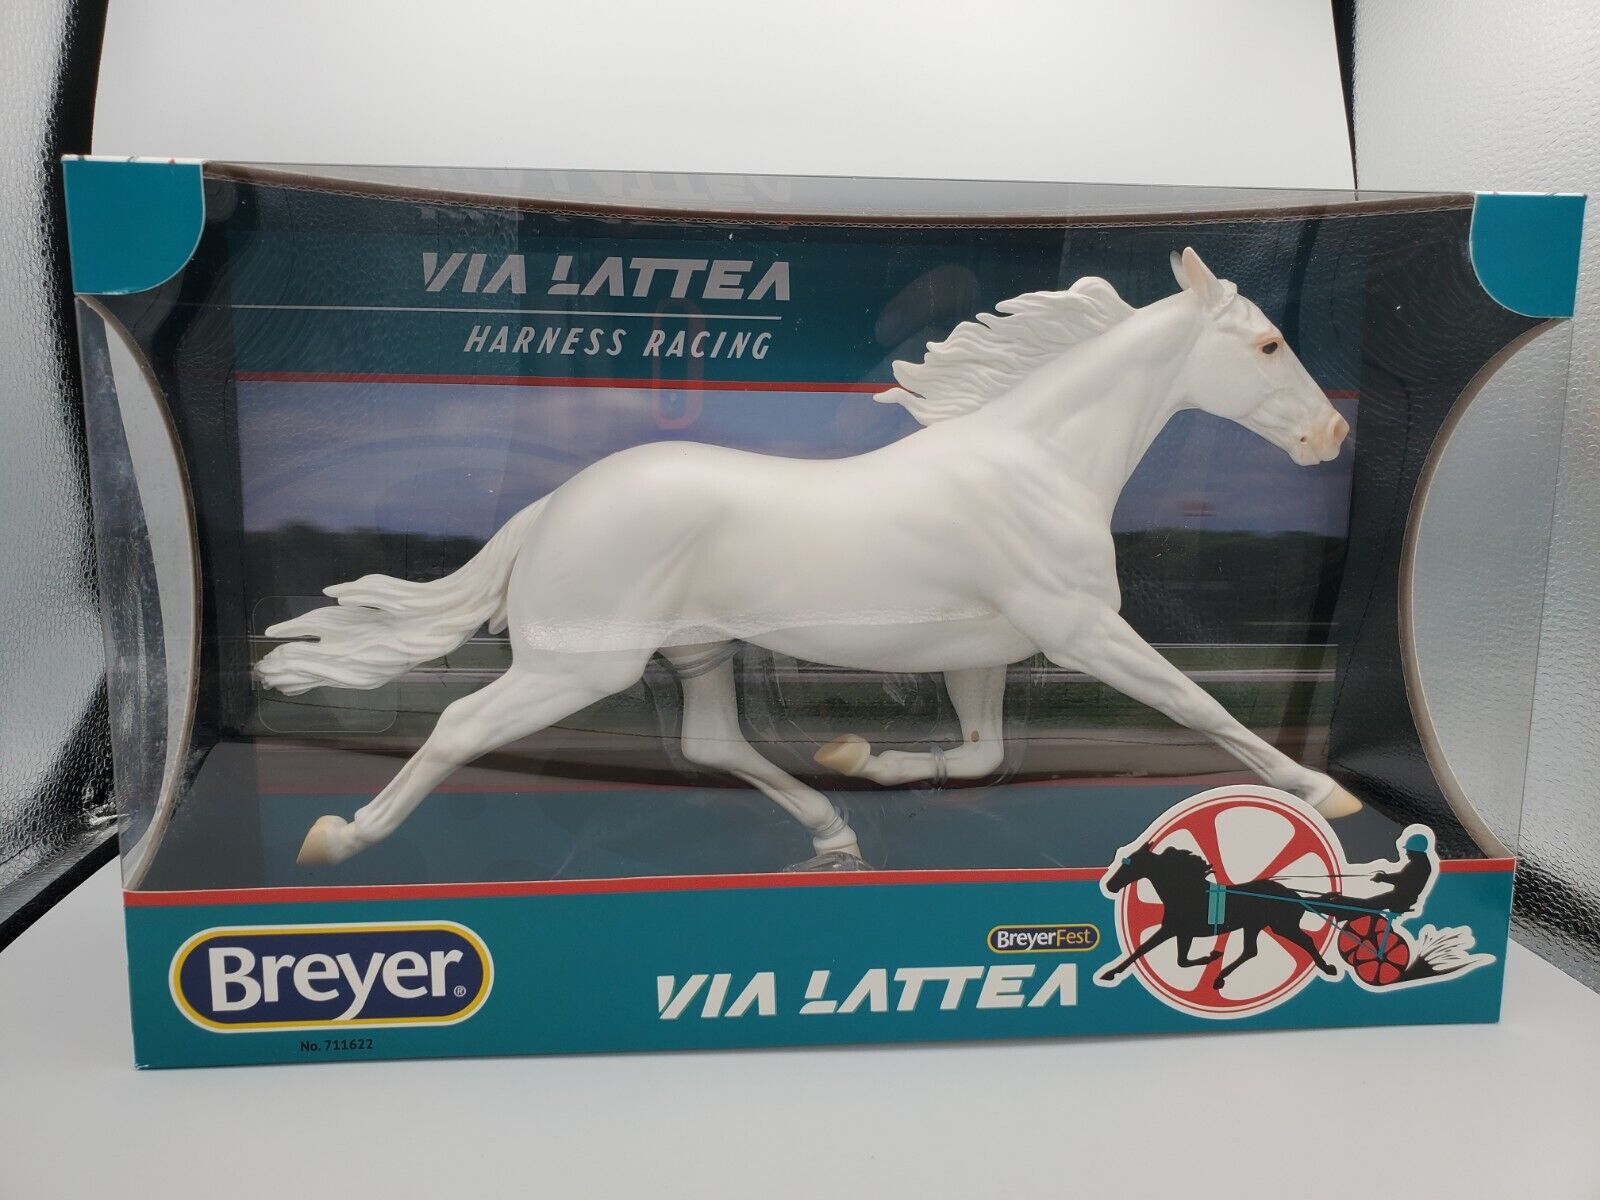 BREYER Breyerfest Via Lattea Harness Racing #711622 